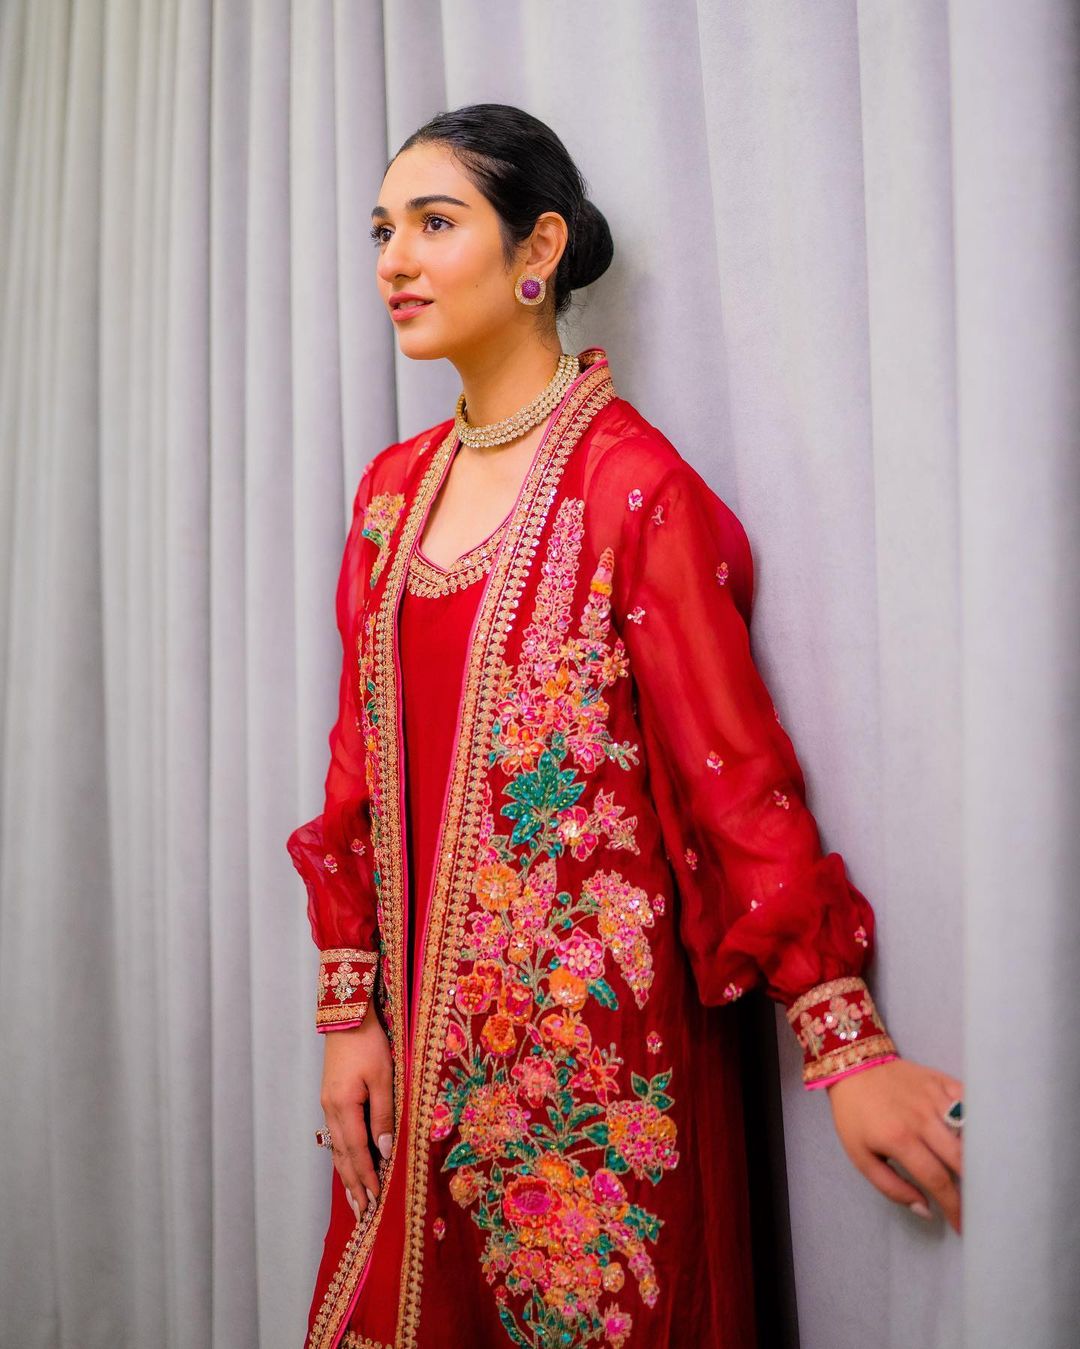 Sarah Khan Looks Graceful as Ever in Red Jora by Zainab Salman - Lens